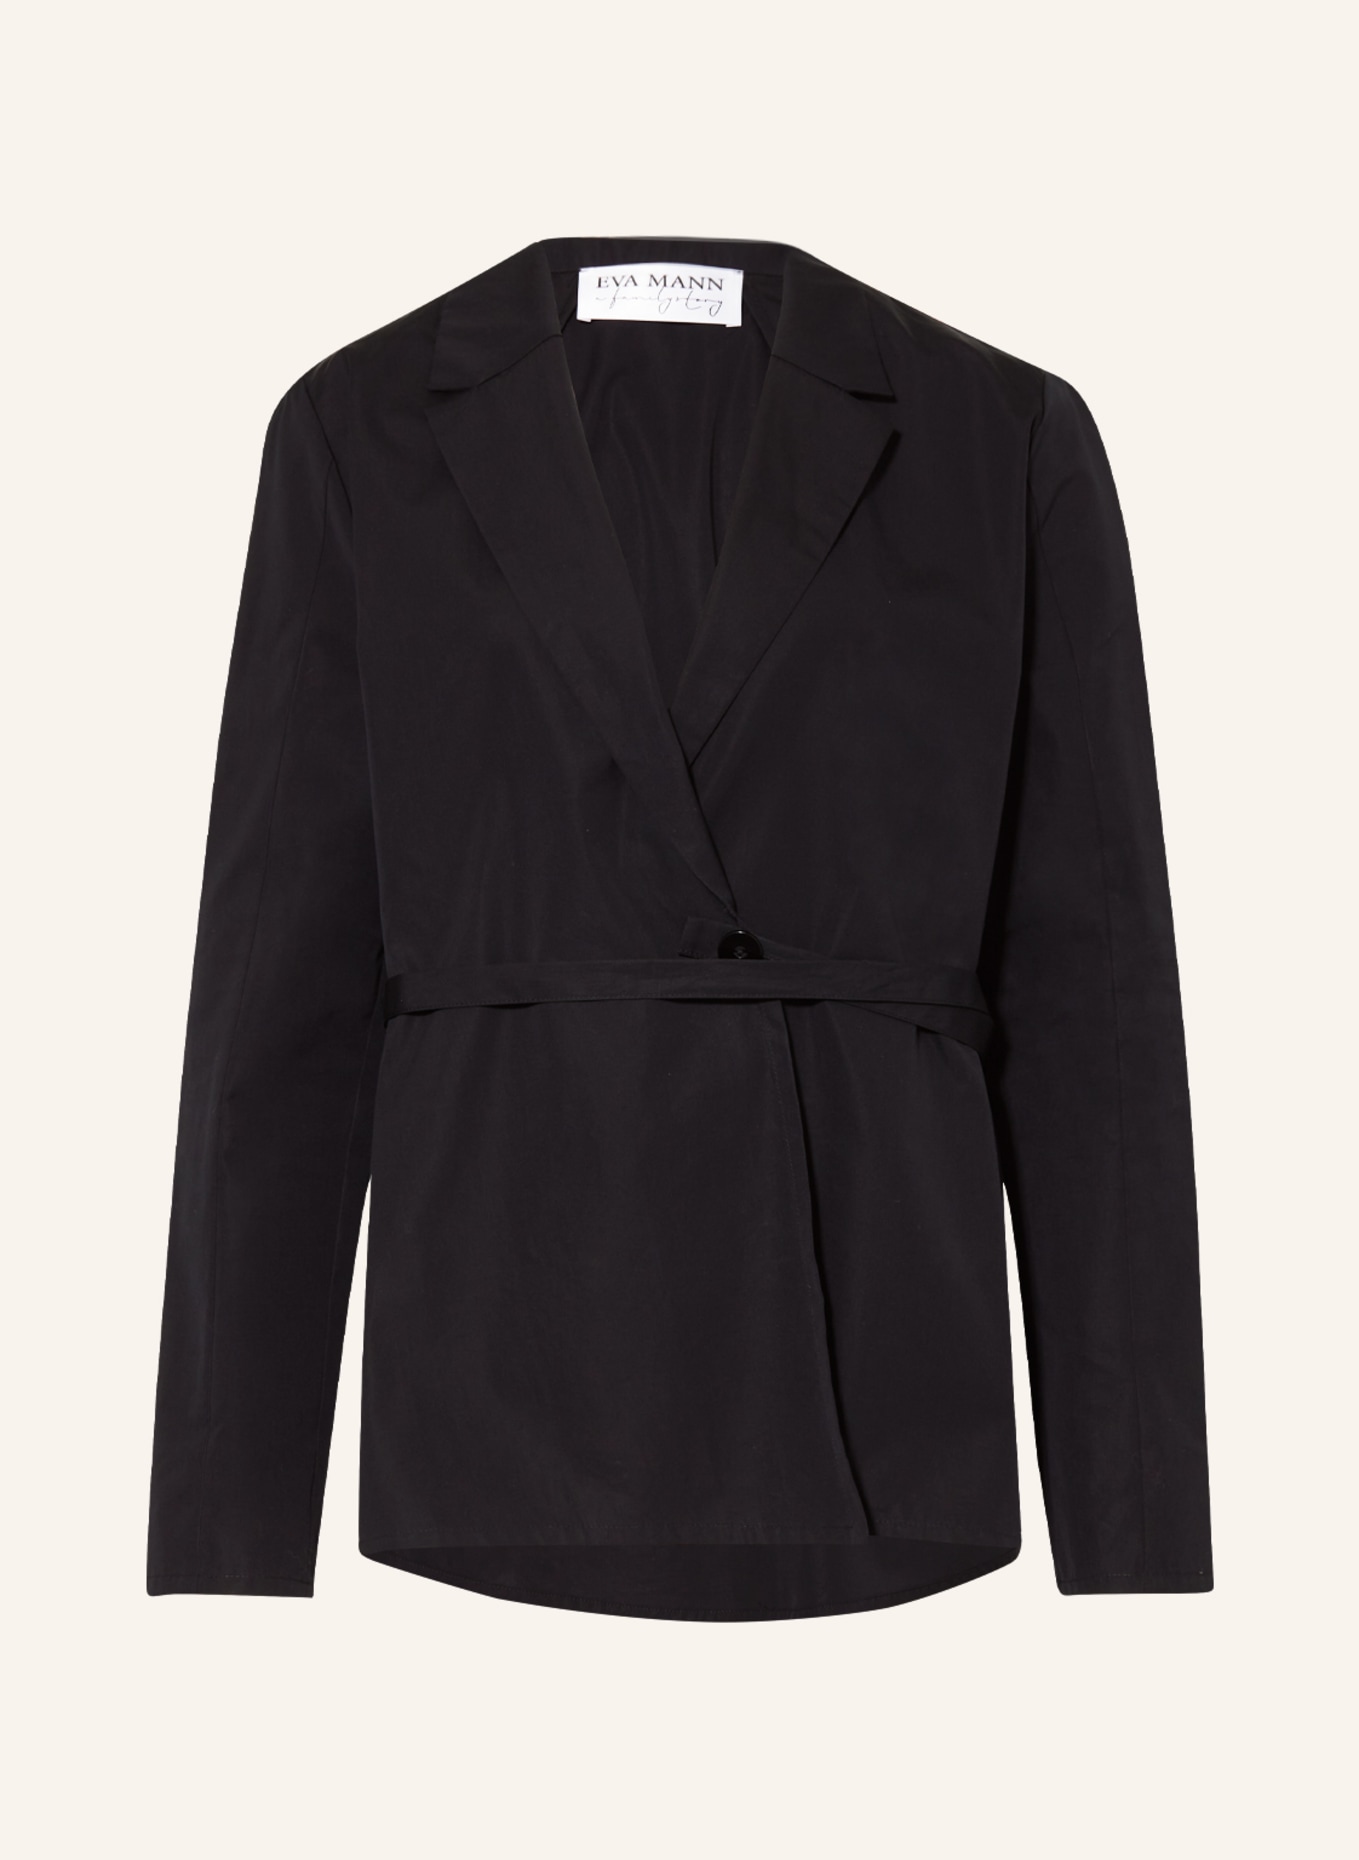 EVA MANN Wrap blouse CHRISTIANE WINSTON, Color: BLACK (Image 1)